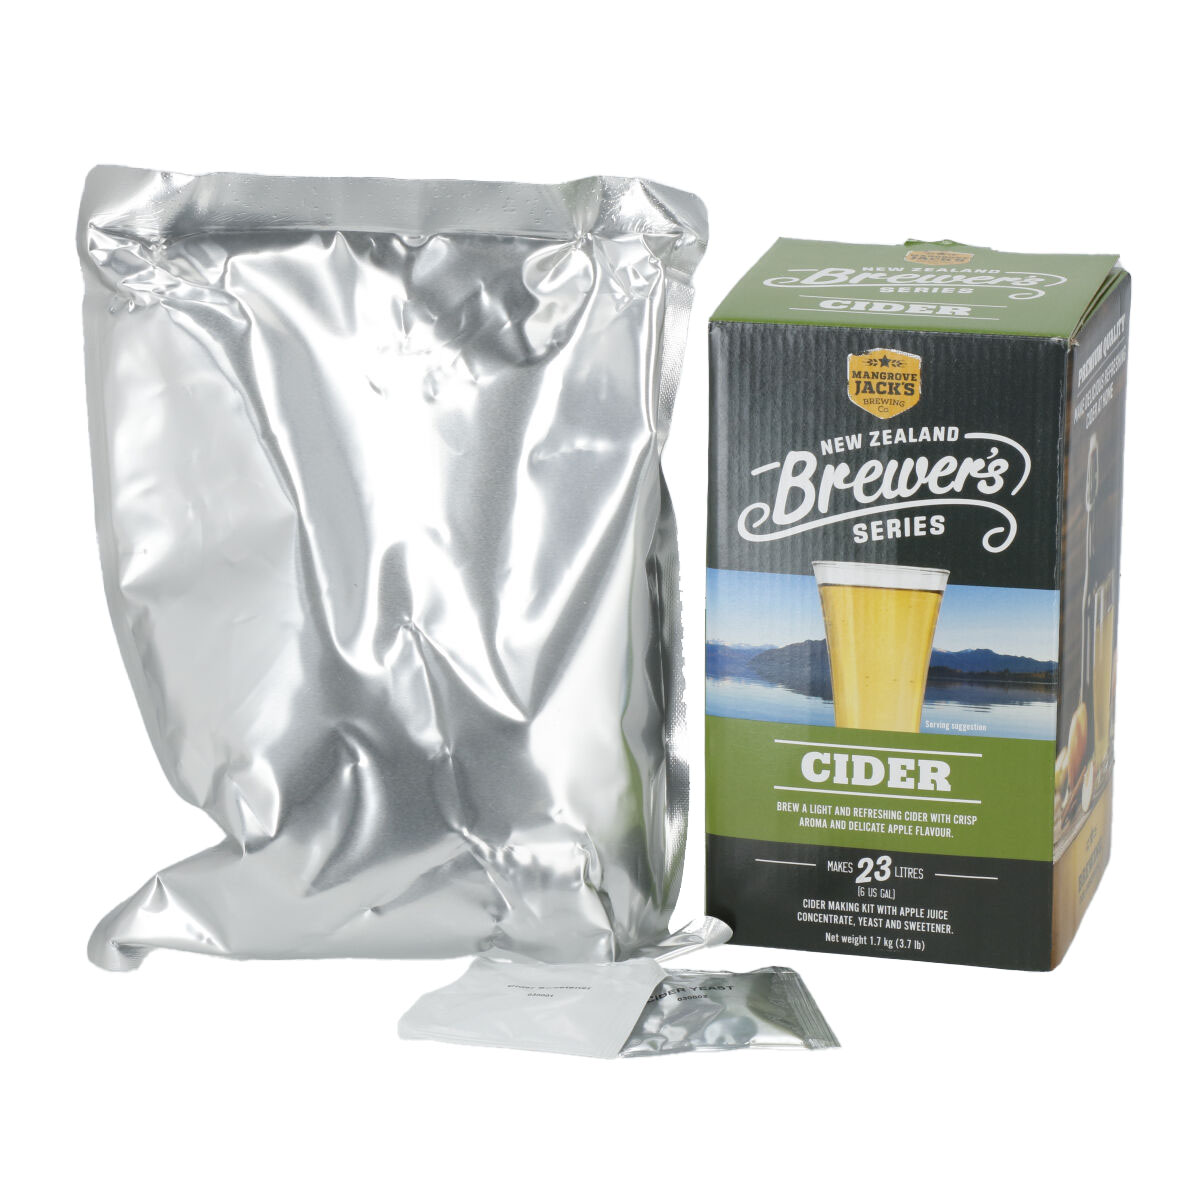 Mangrove Jack's New Zealand Brewers Apple Cider 